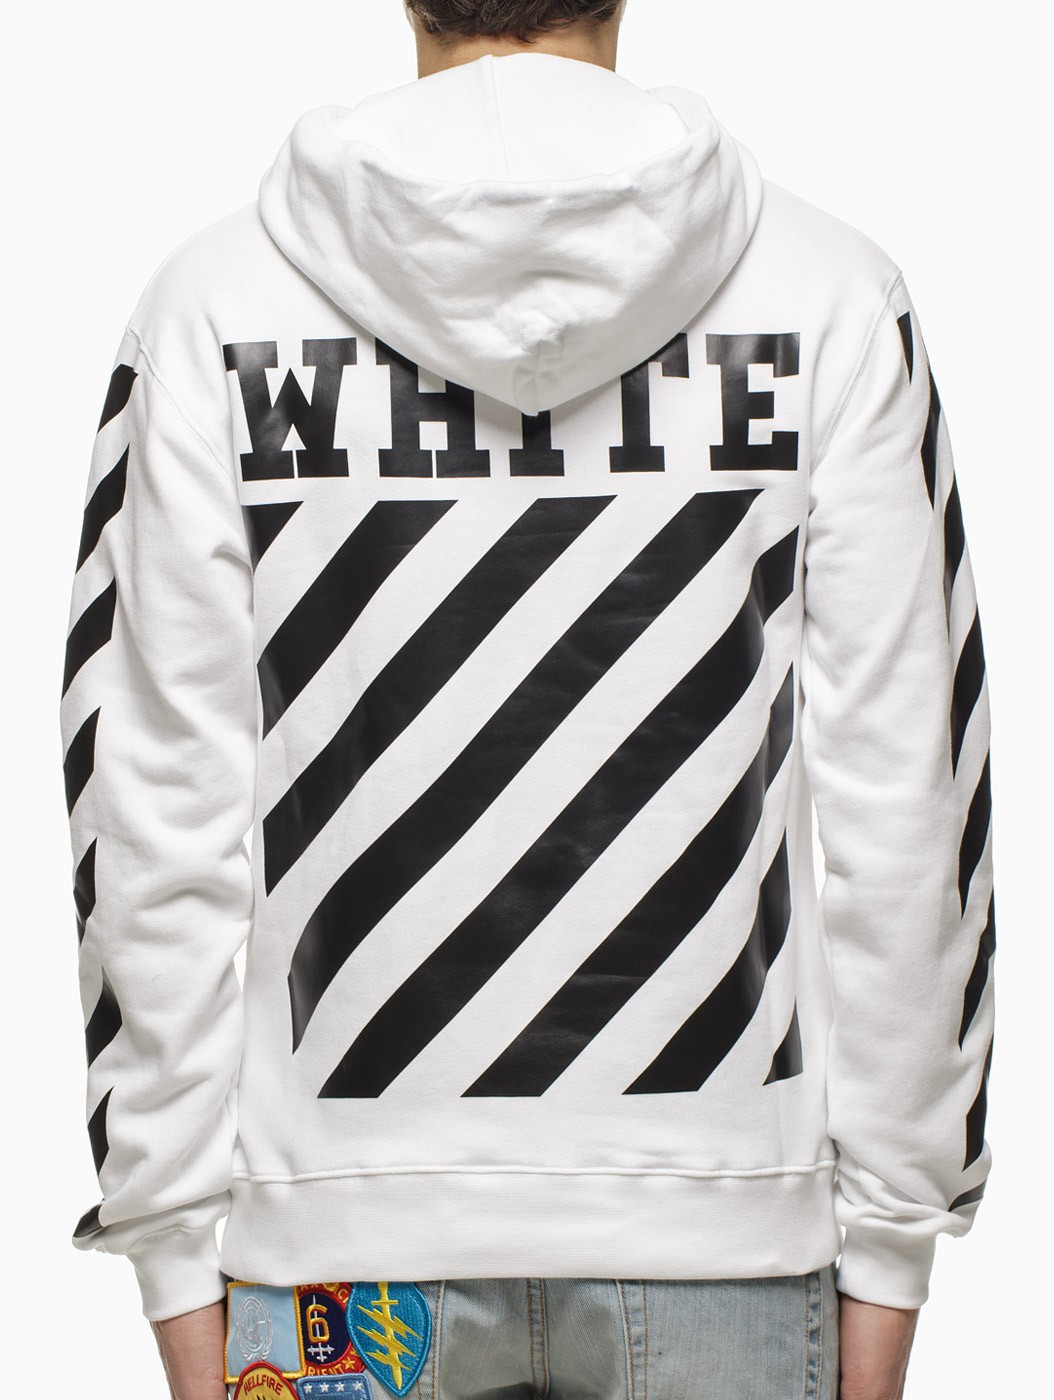 Off-White c/o Virgil Abloh “Caravaggio” Sweatshirt in White for Men - Lyst